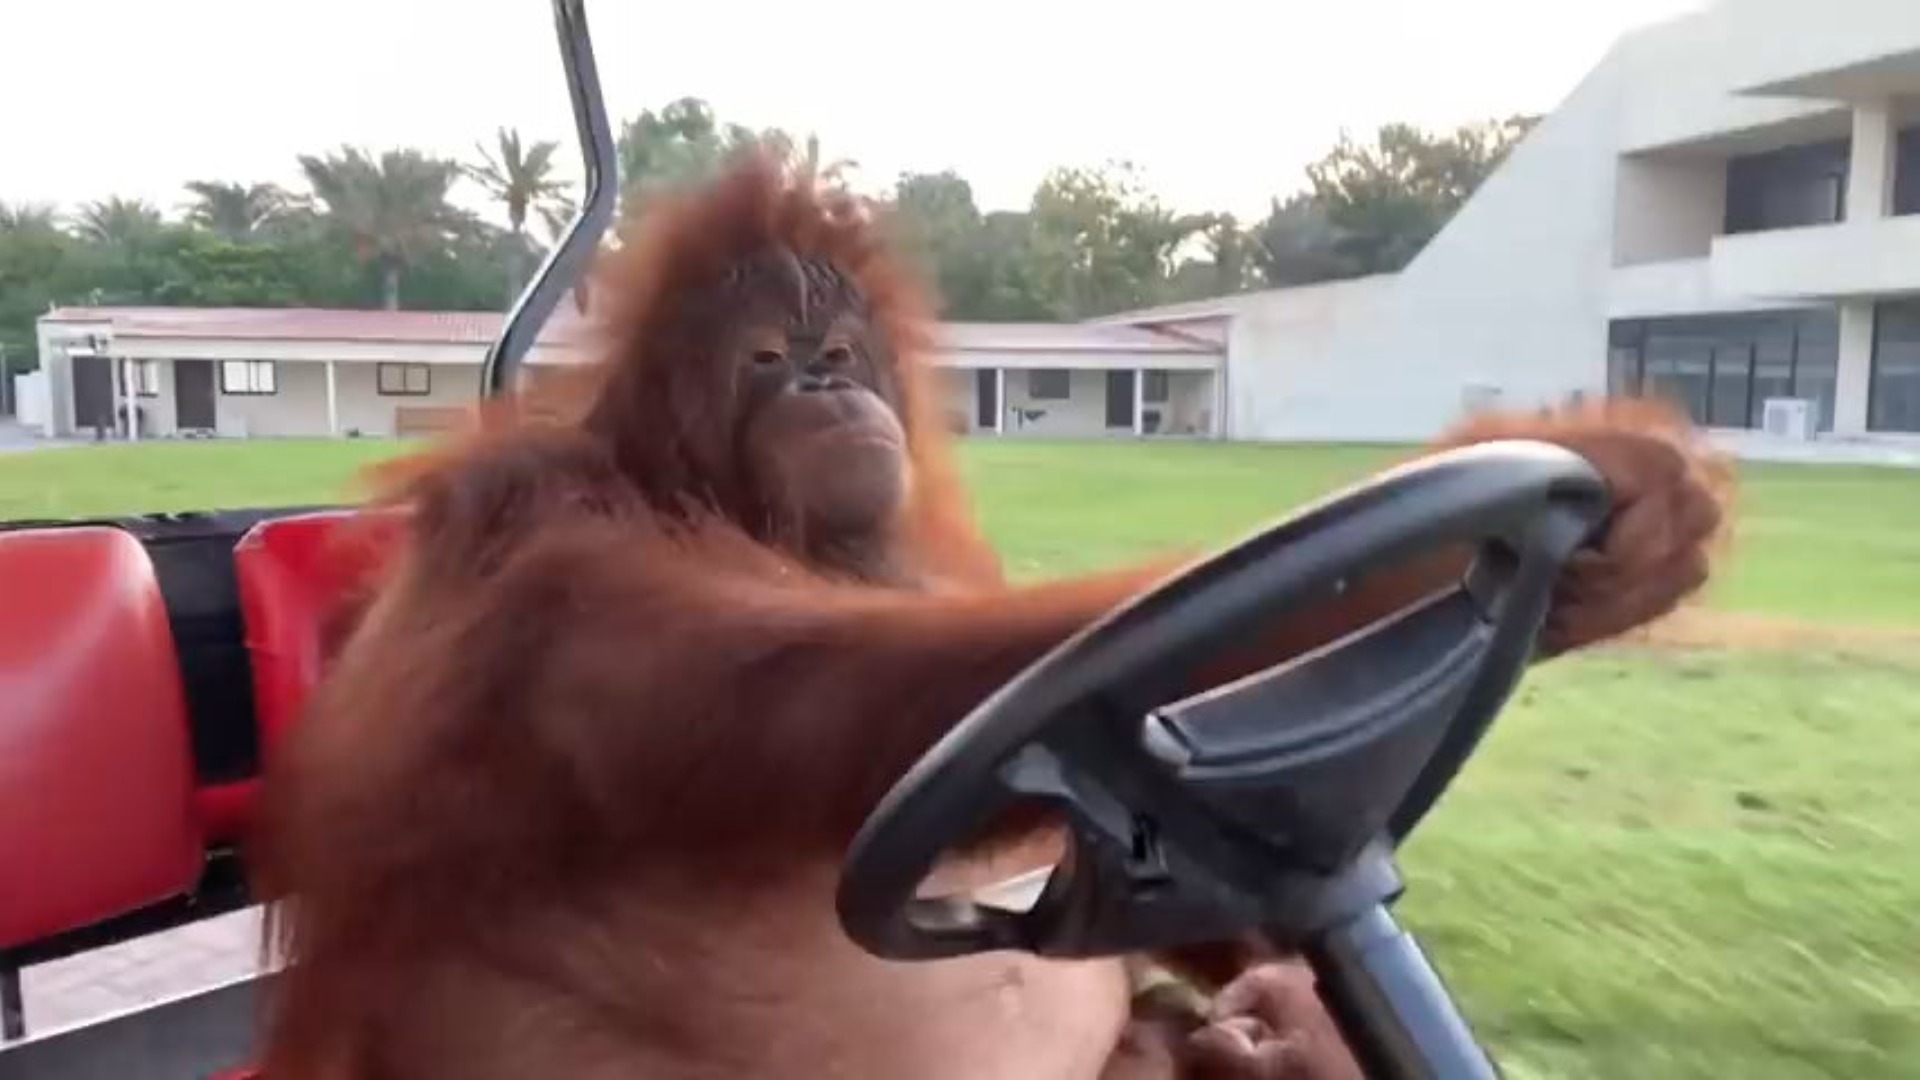 This orangutan is channeling his inner Tony Soprano